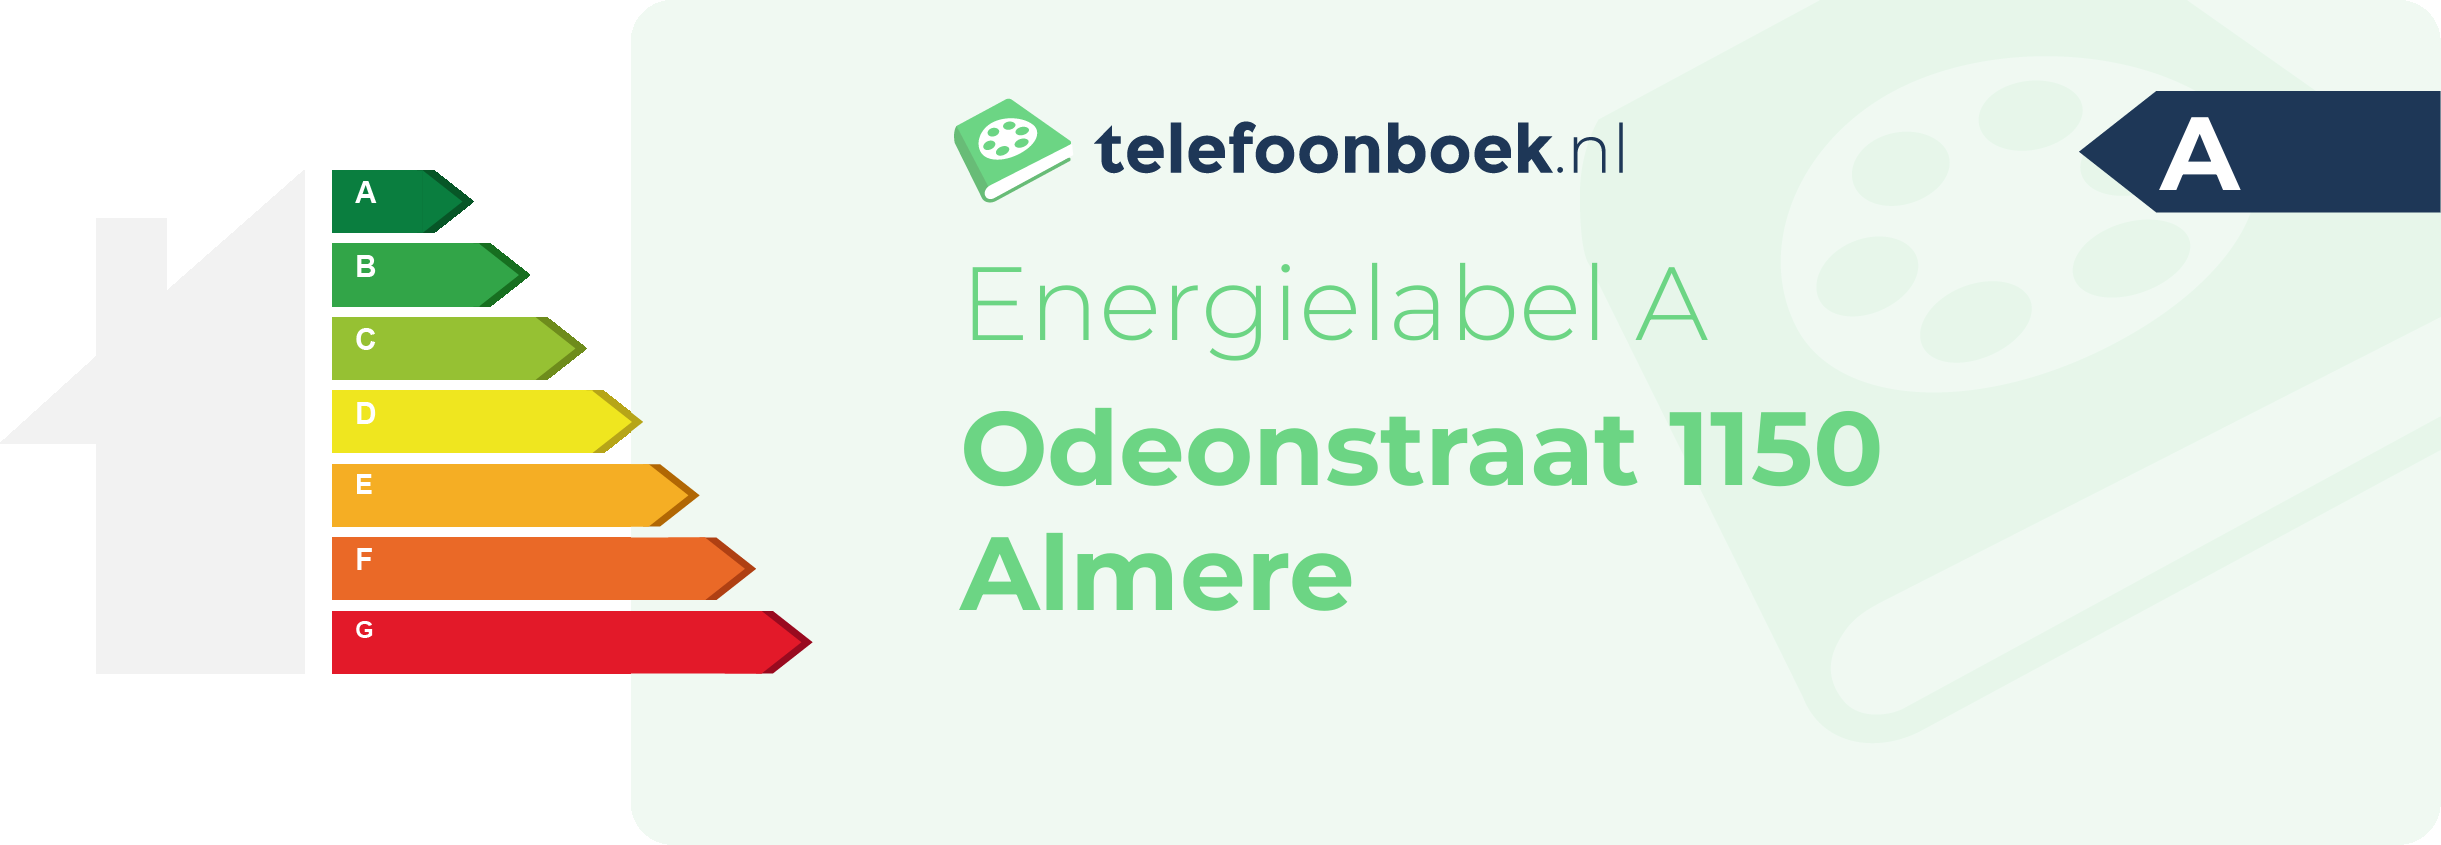 Energielabel Odeonstraat 1150 Almere